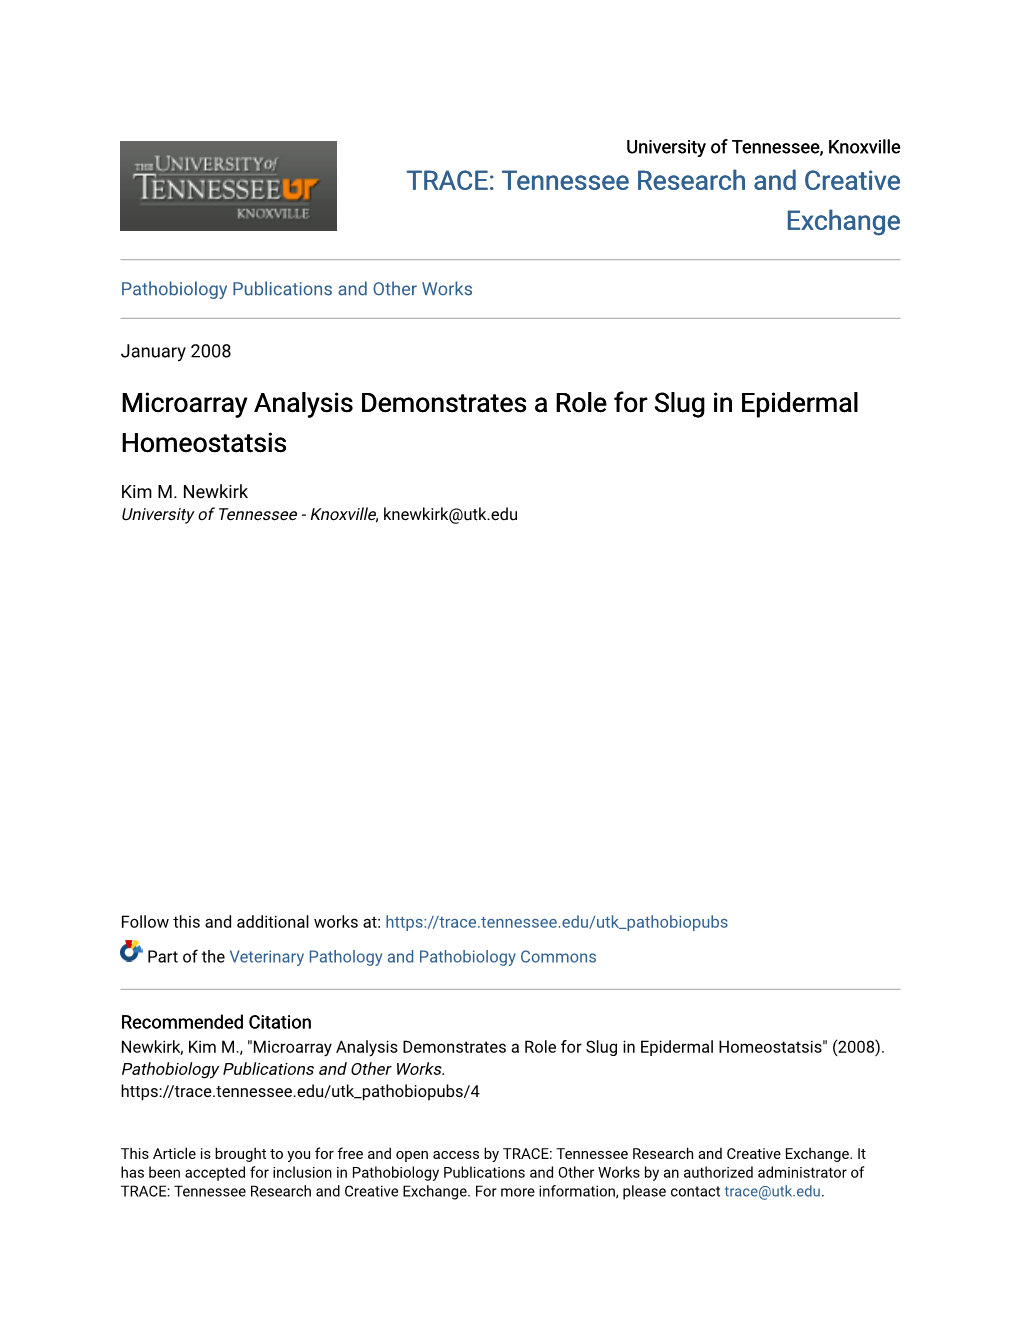 Microarray Analysis Demonstrates a Role for Slug in Epidermal Homeostatsis